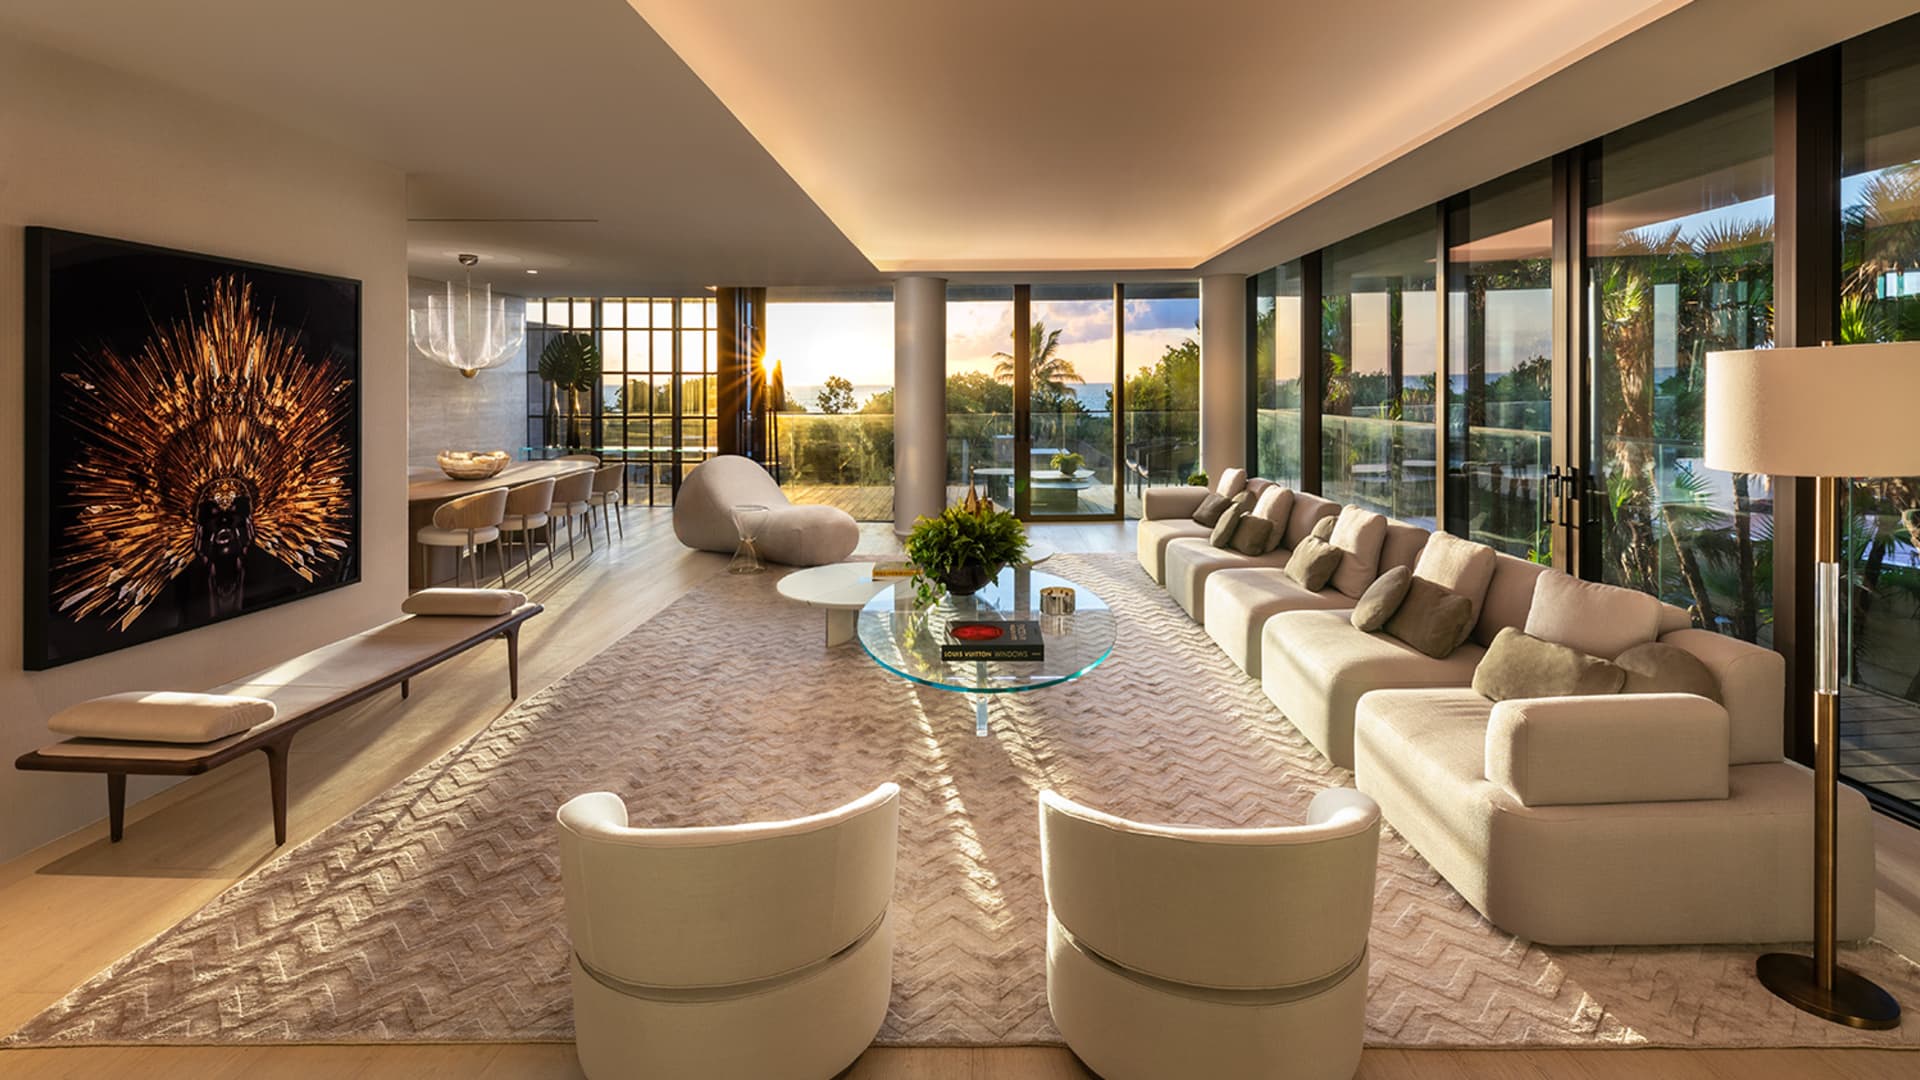 The Arte condominium in the Surfside neighborhood of Miami Beach features 16 luxury units.